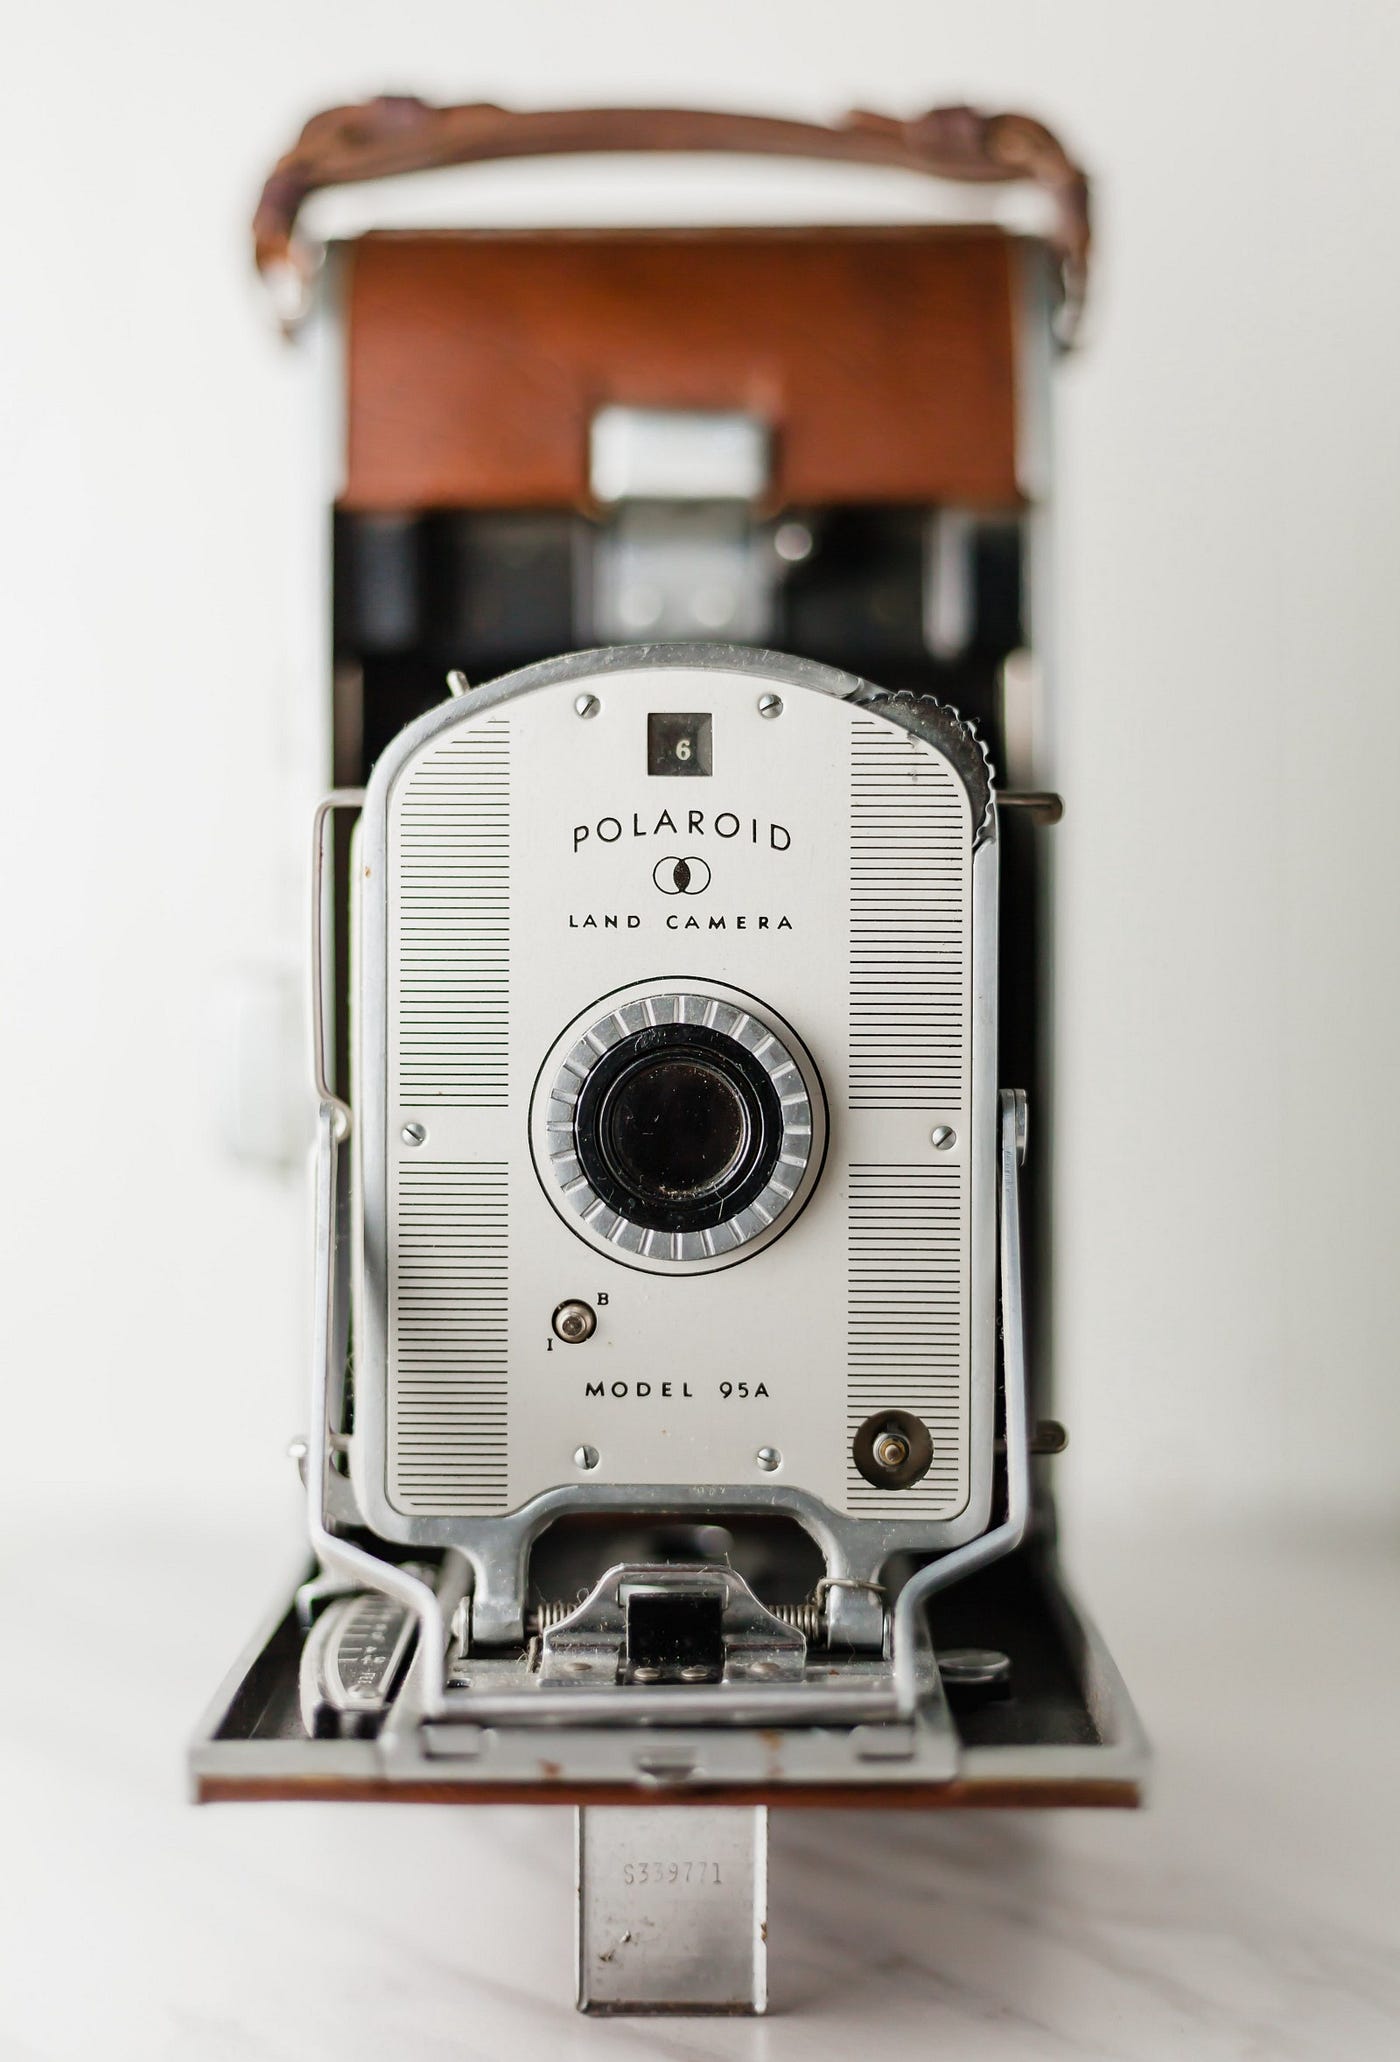 Polaroid Corporation — Wikipédia